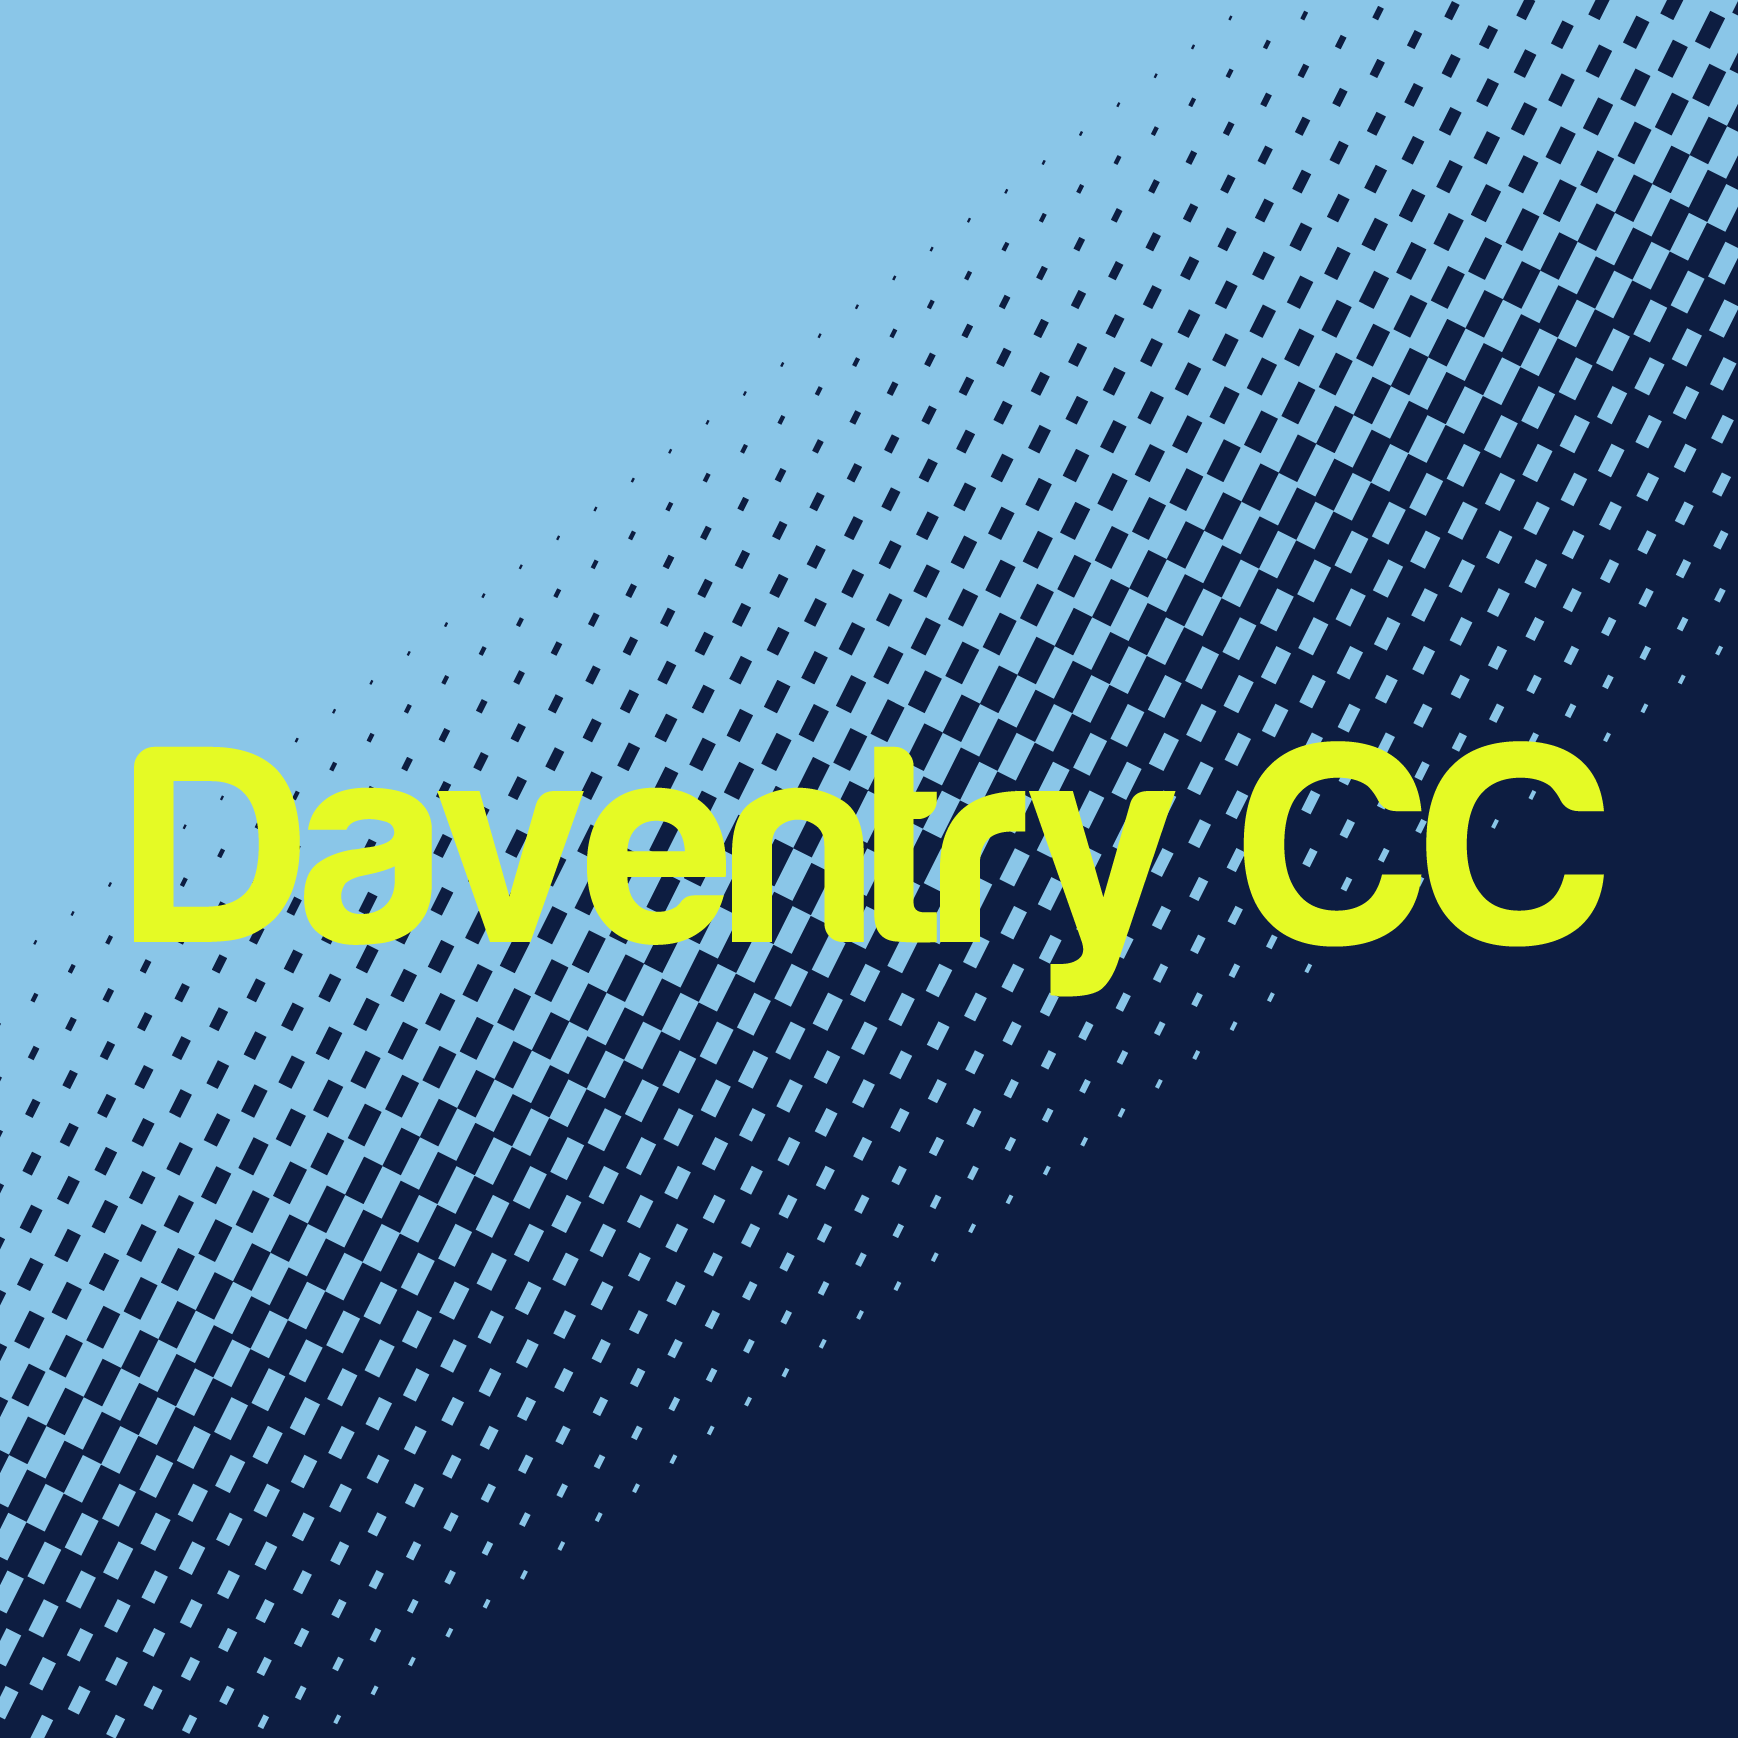 Club Image for DAVENTRY CC